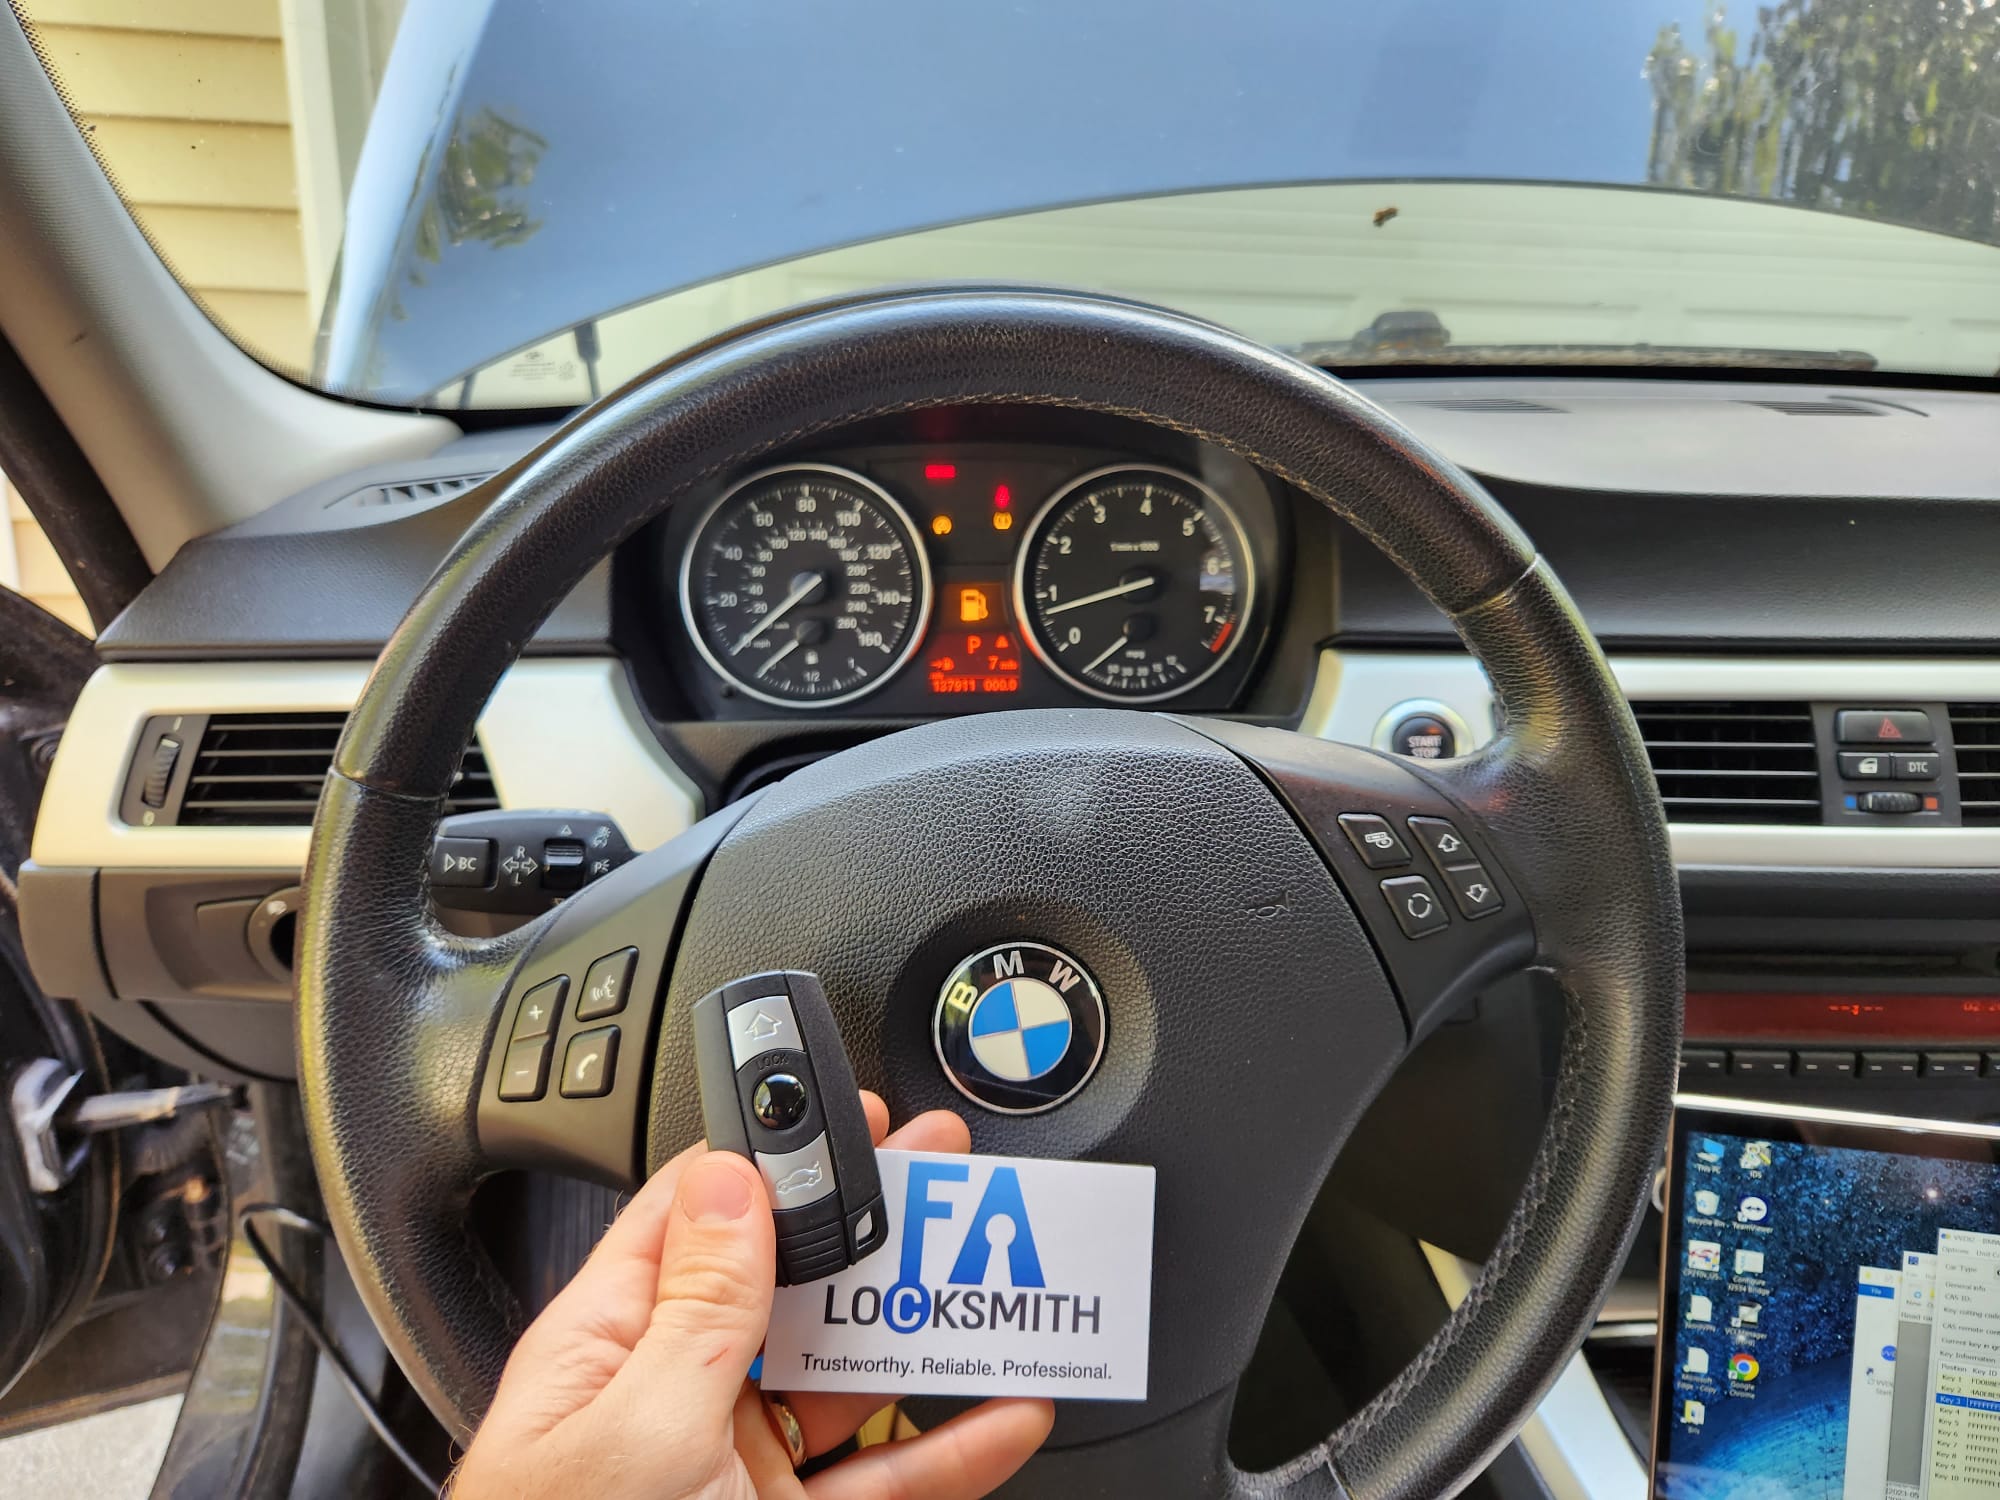 BMW Key Replacement Options - FA Locksmith (5)